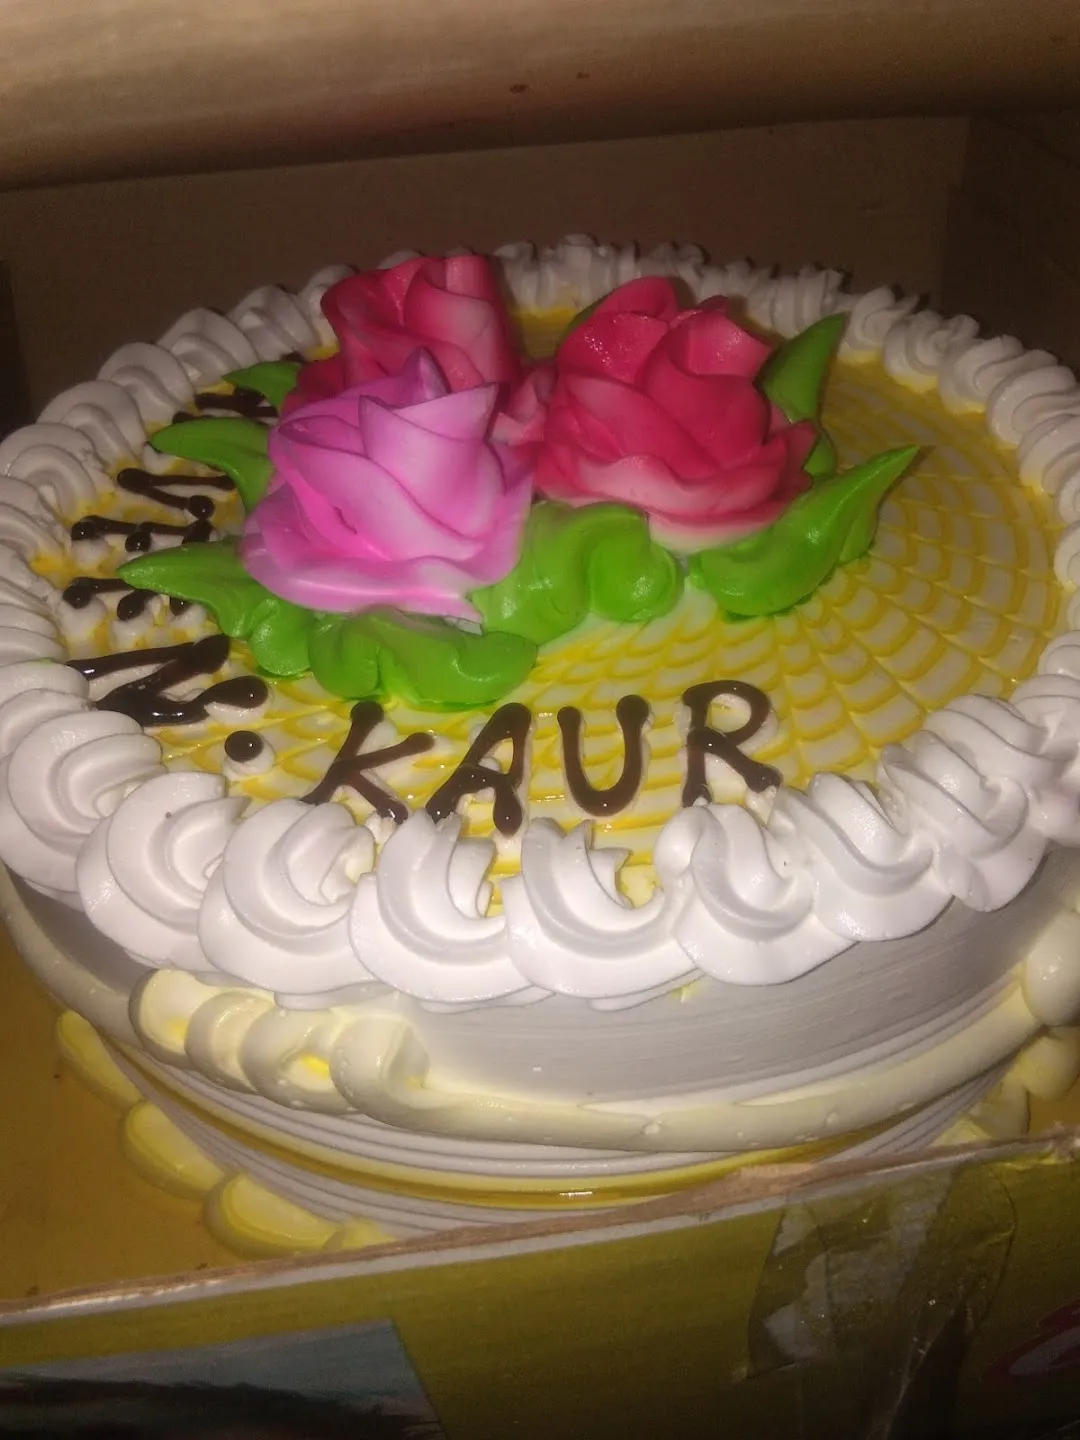 Krisna Birthday Cake, 24x7 Home delivery of Cake in Avas Vikas colony,  Lucknow